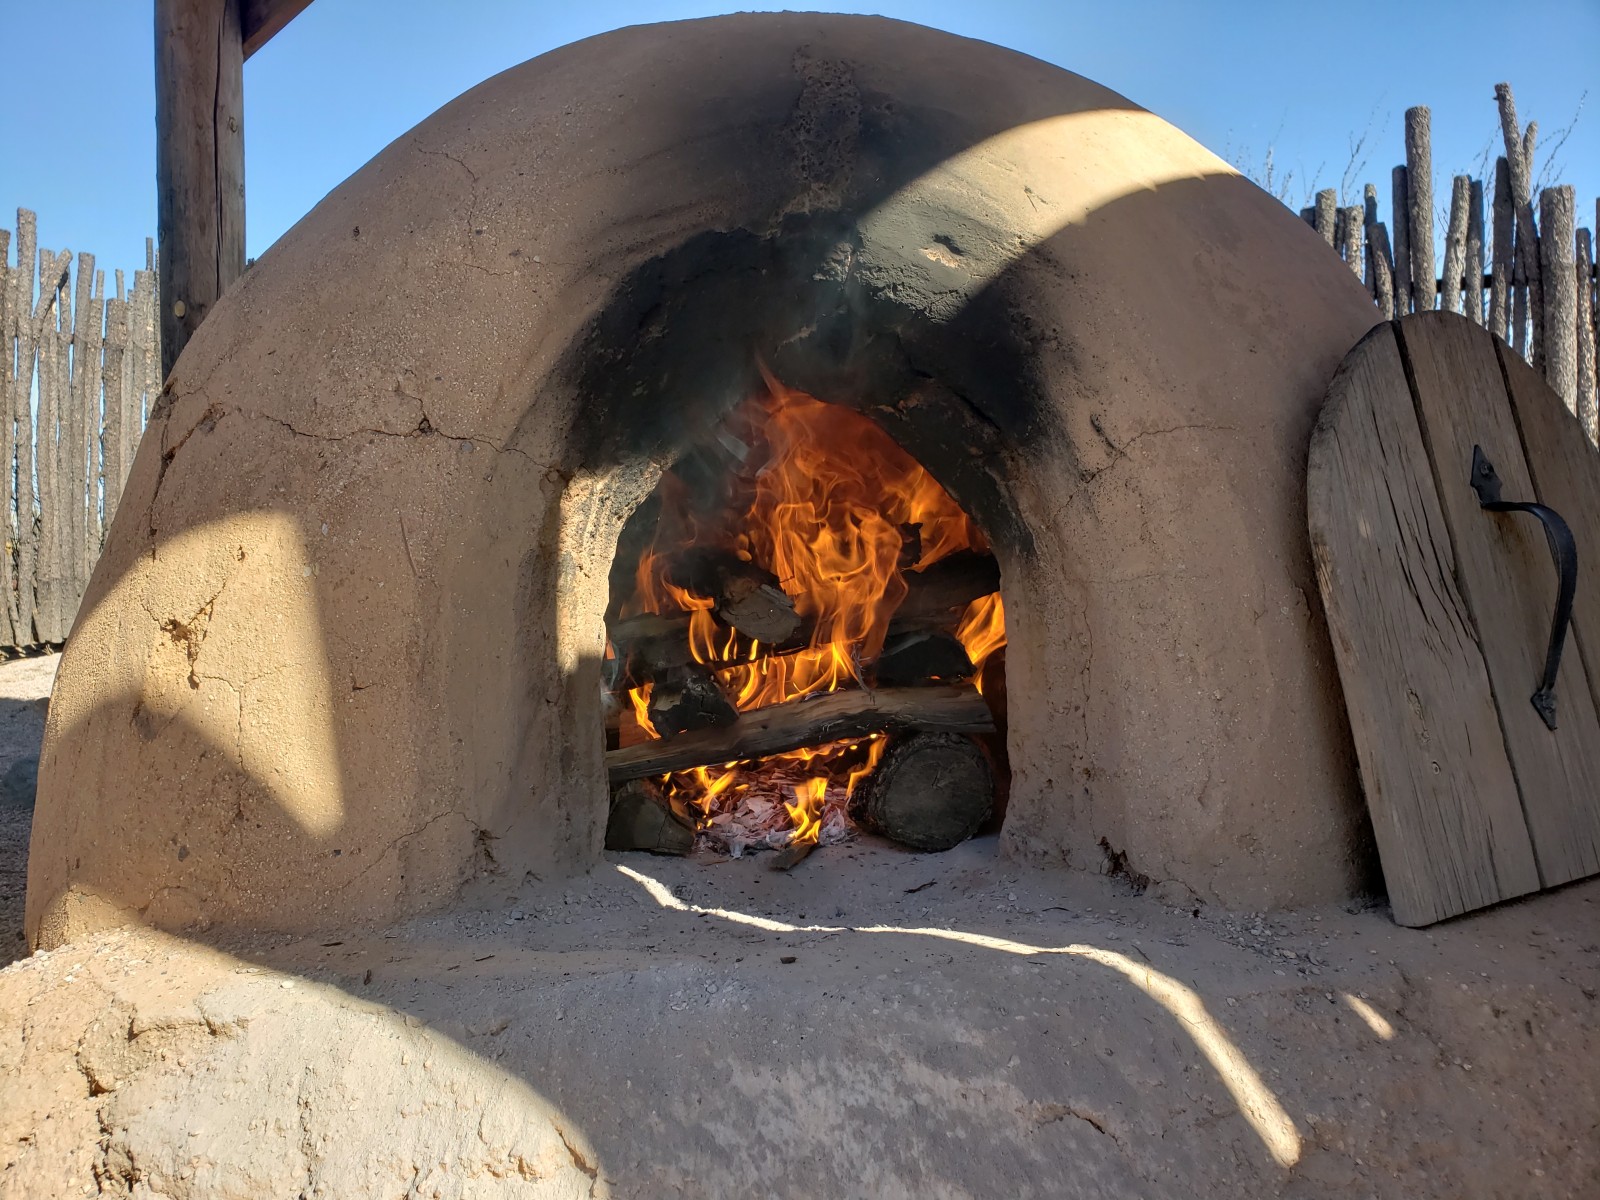 Fort Selden's working horno on display preparing to bake fresh bread.